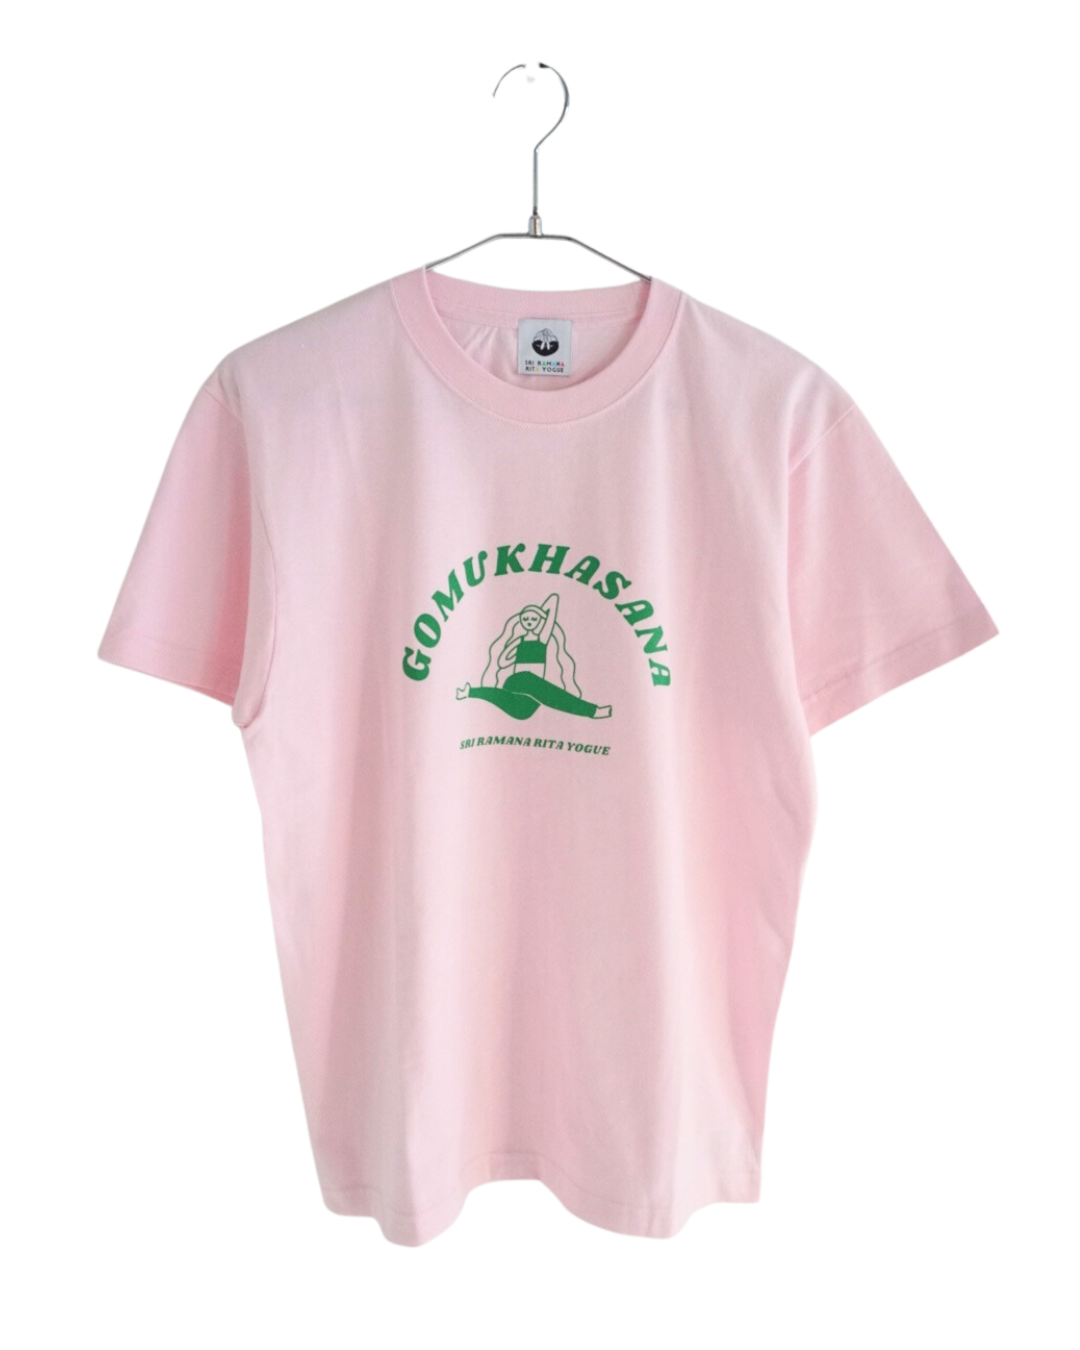 SRI.RAMANA.RITA.YOGUE  GOMUKHASANA　ゴームカーサナ／牛の顔のポーズ　Tシャツ(ピンク×グリーン）